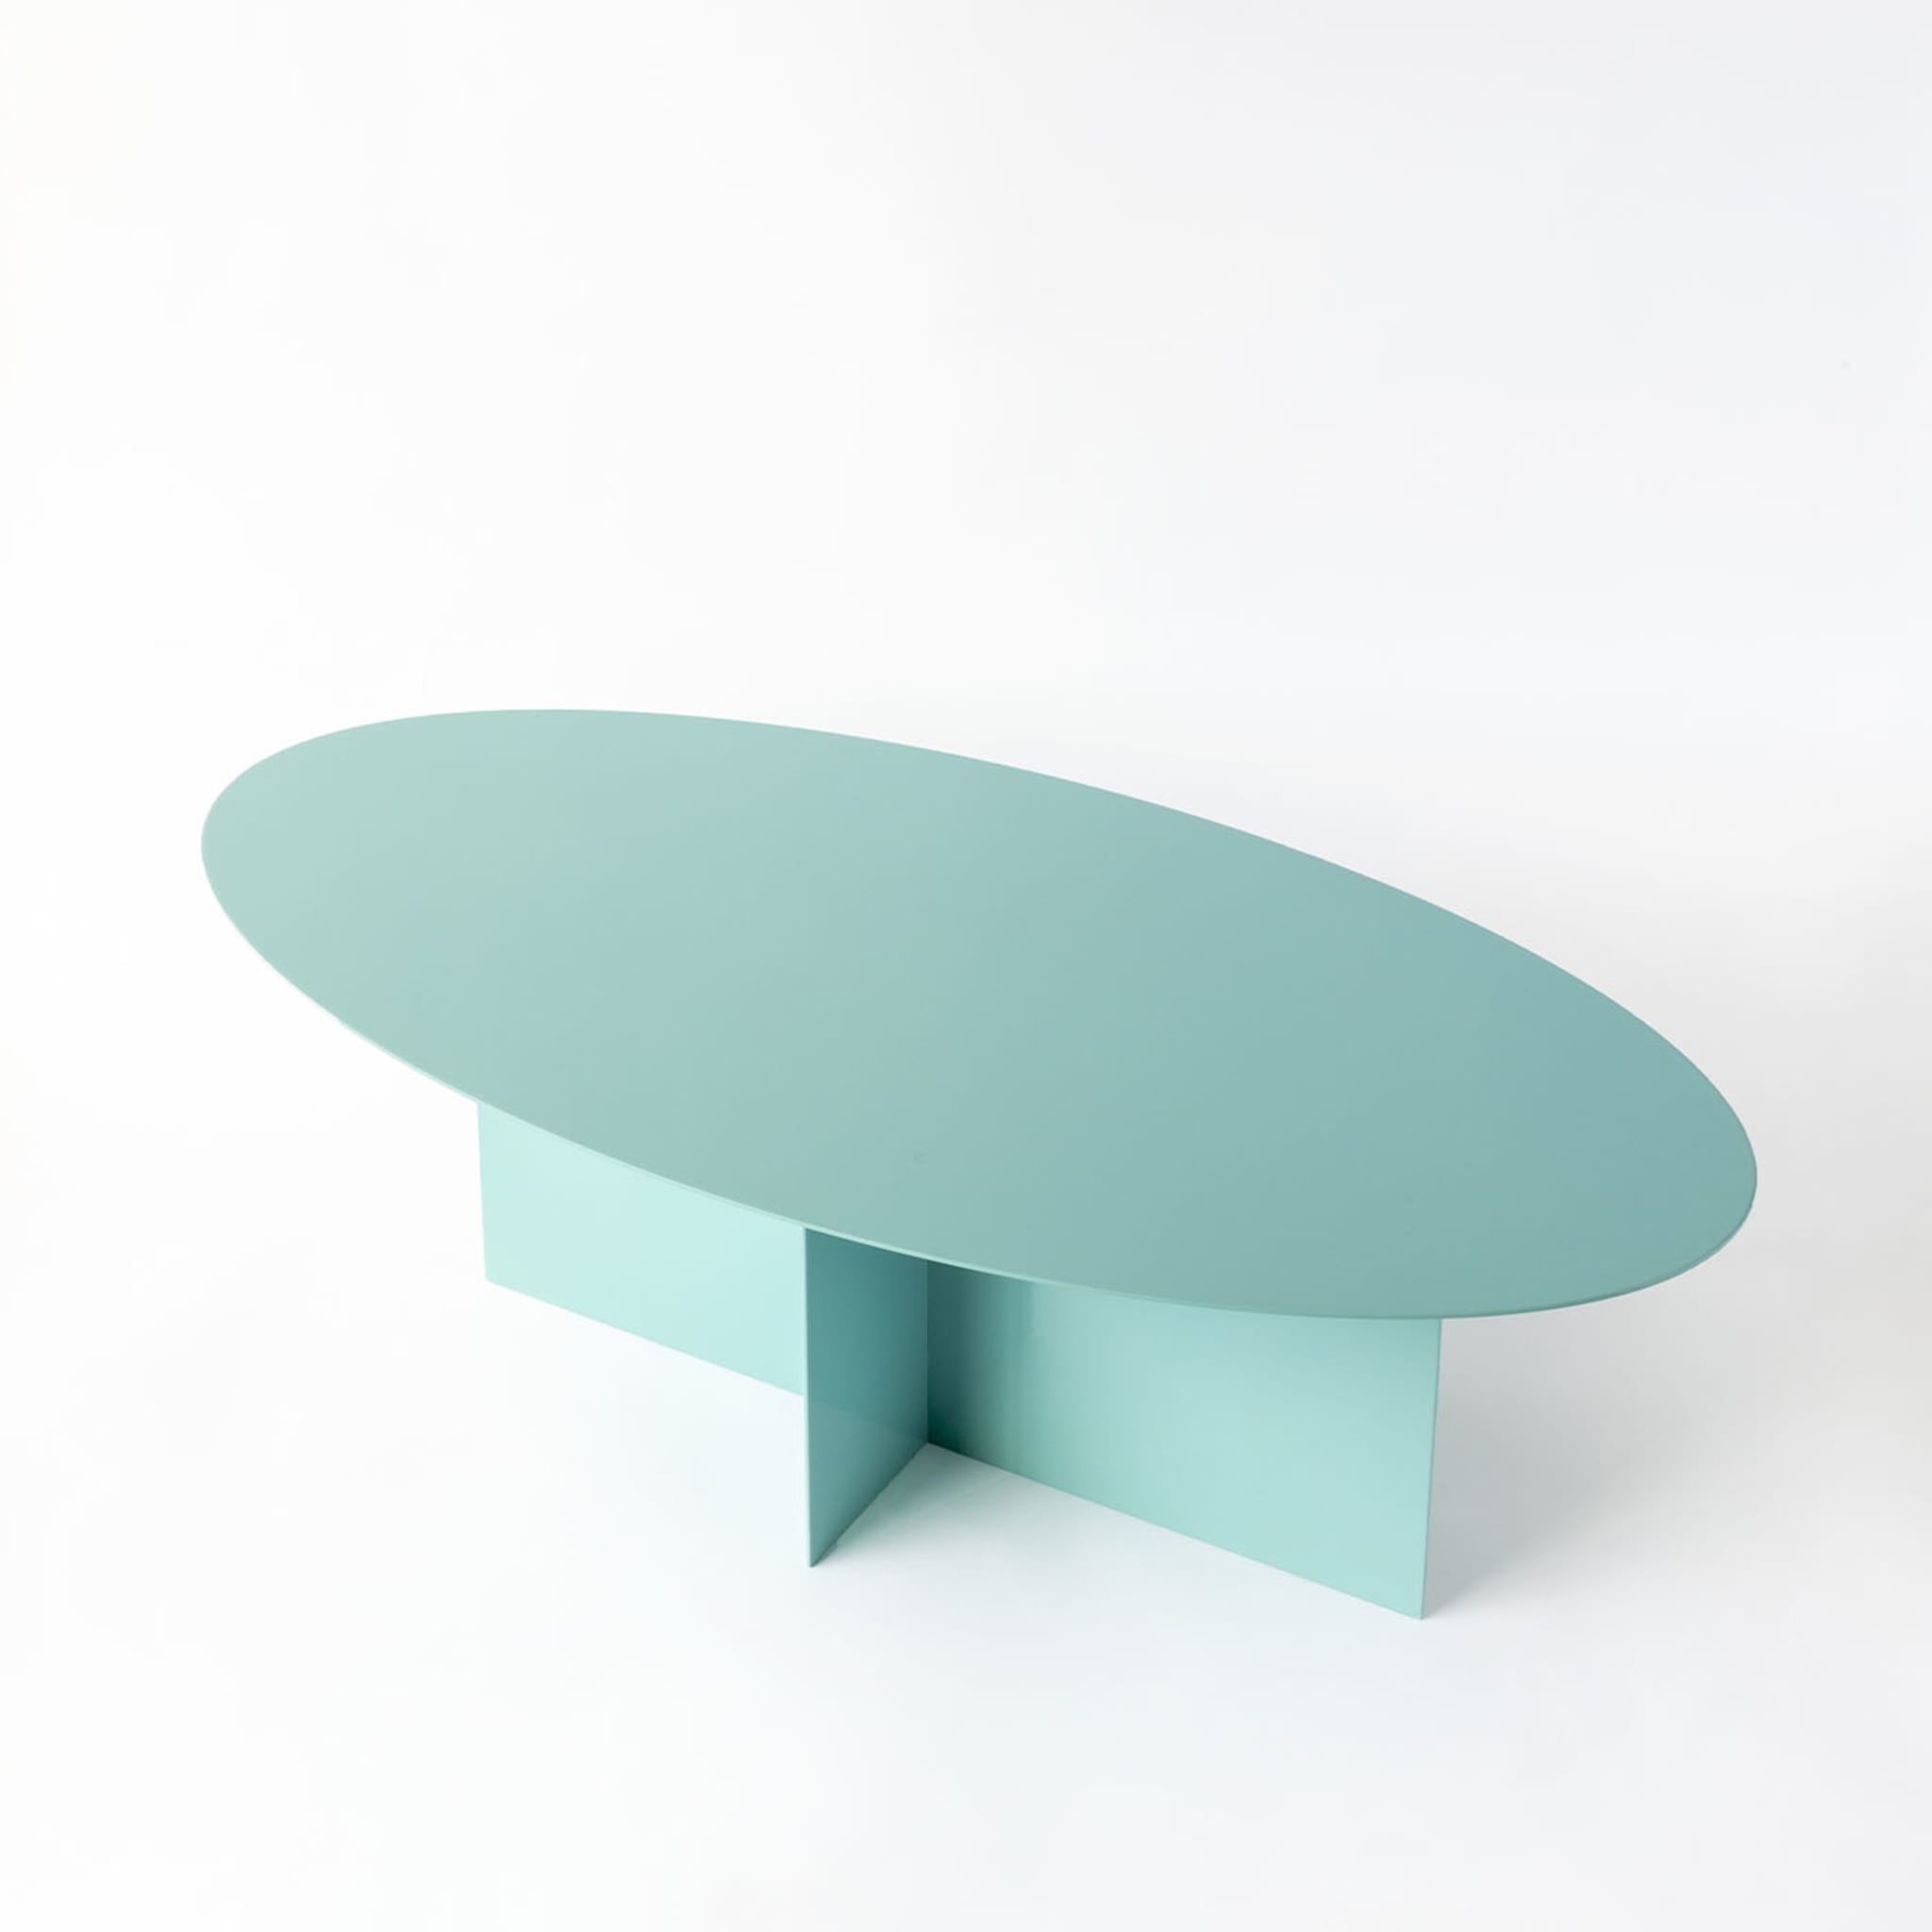 Across Oval Coffe Table Elliptical by Claudia Pignatale - Vue alternative 2